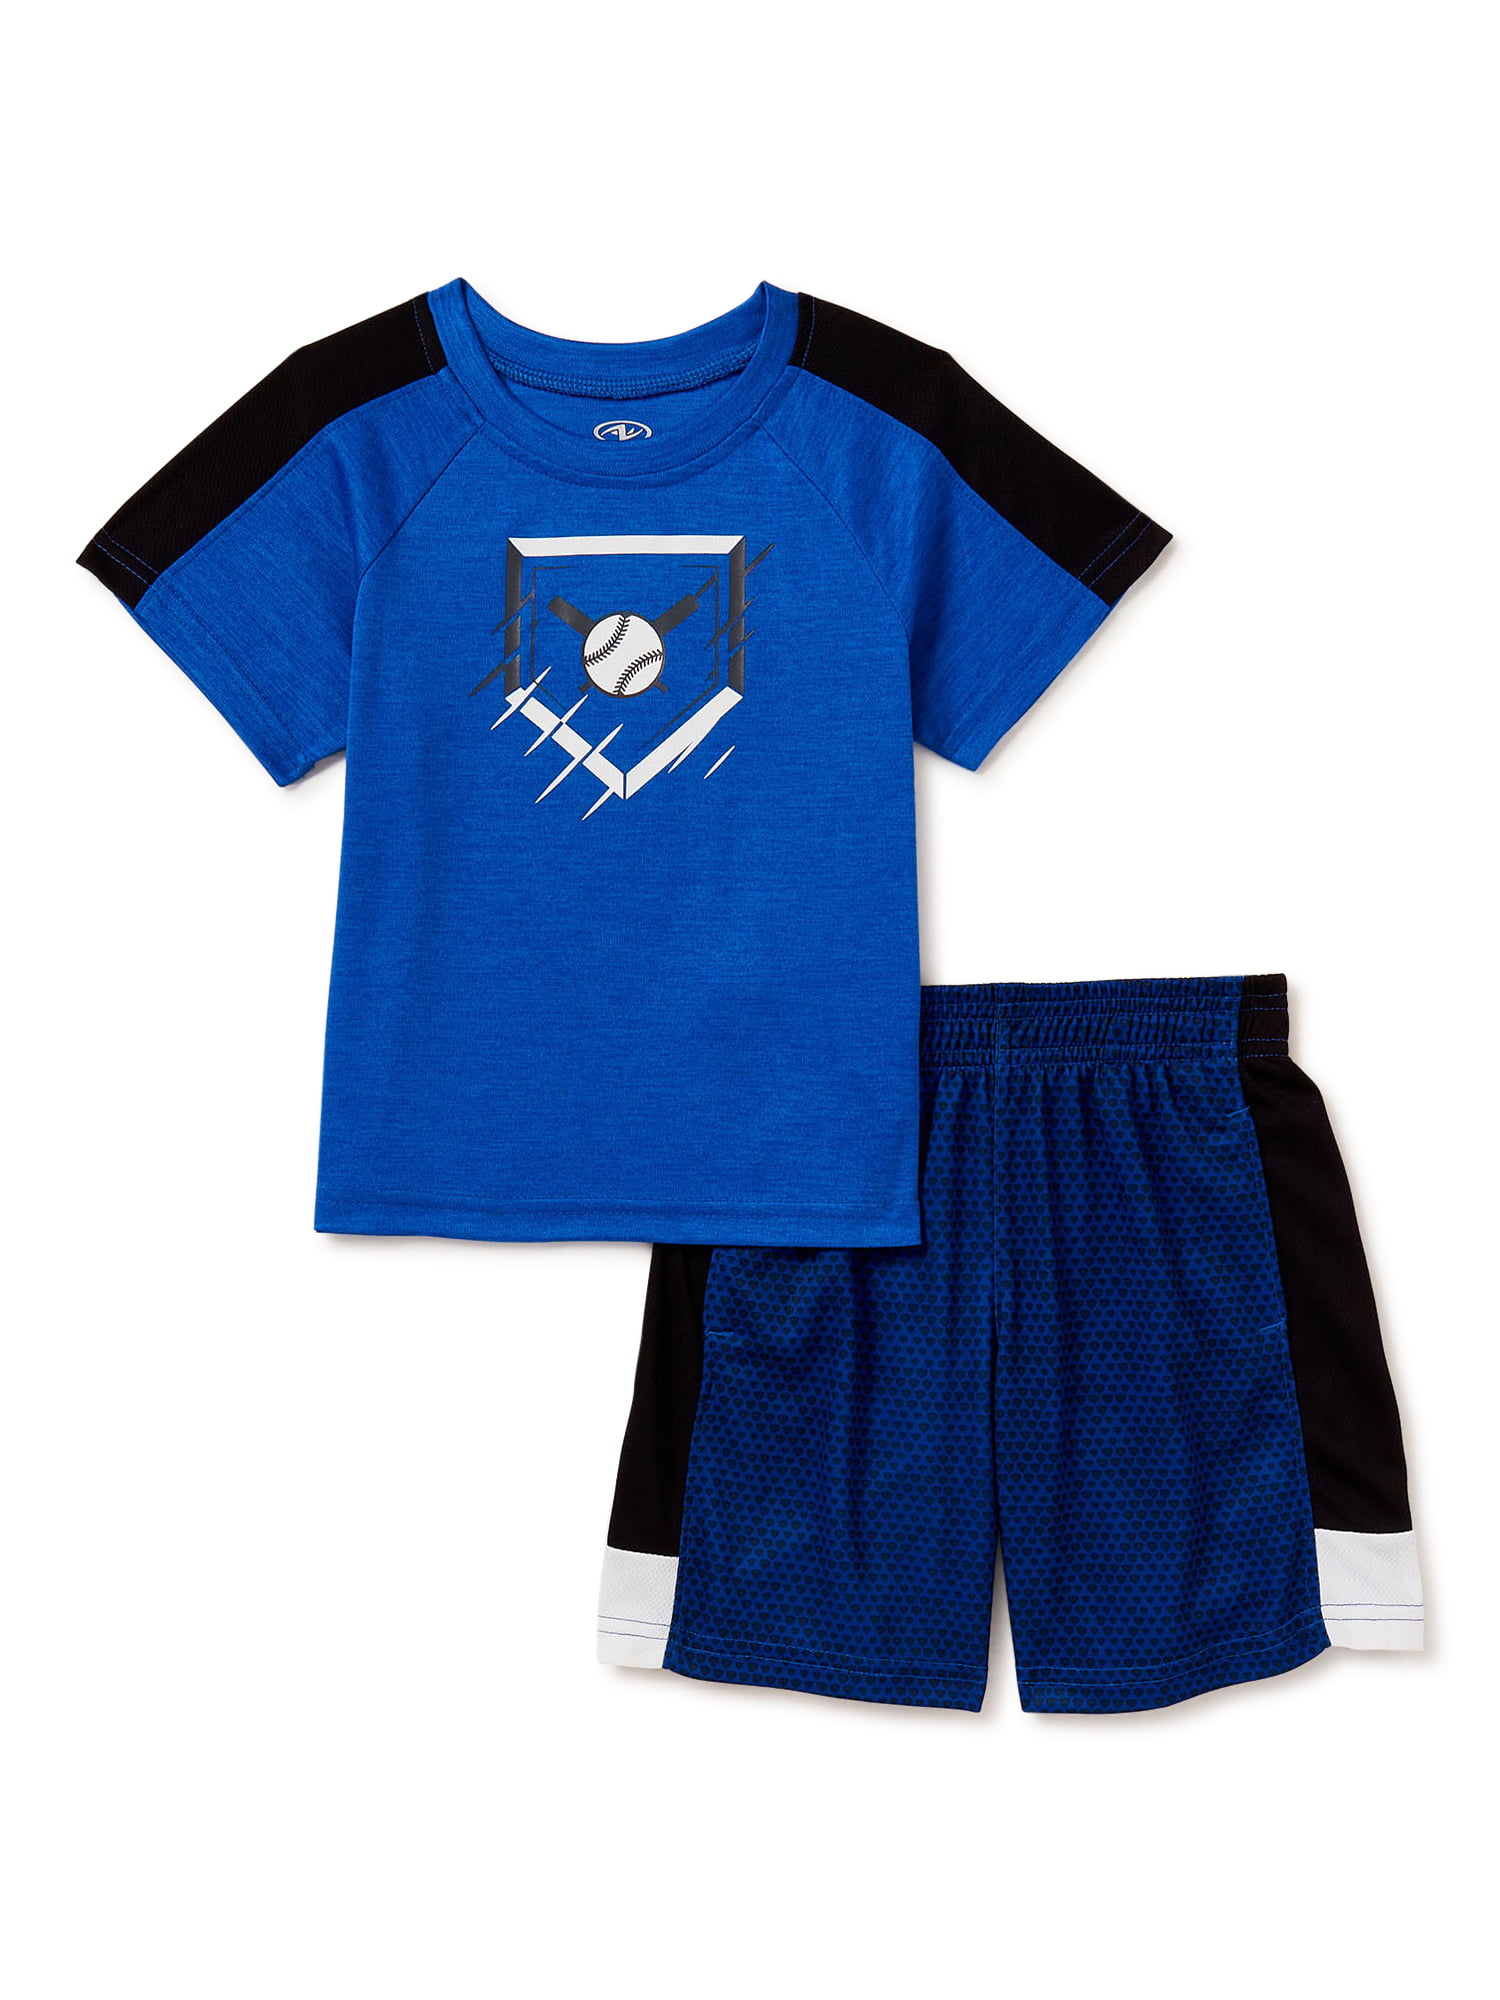 Athletic Works Toddler Boys' T-Shirt Set, 2 Piece Set - Walmart.com